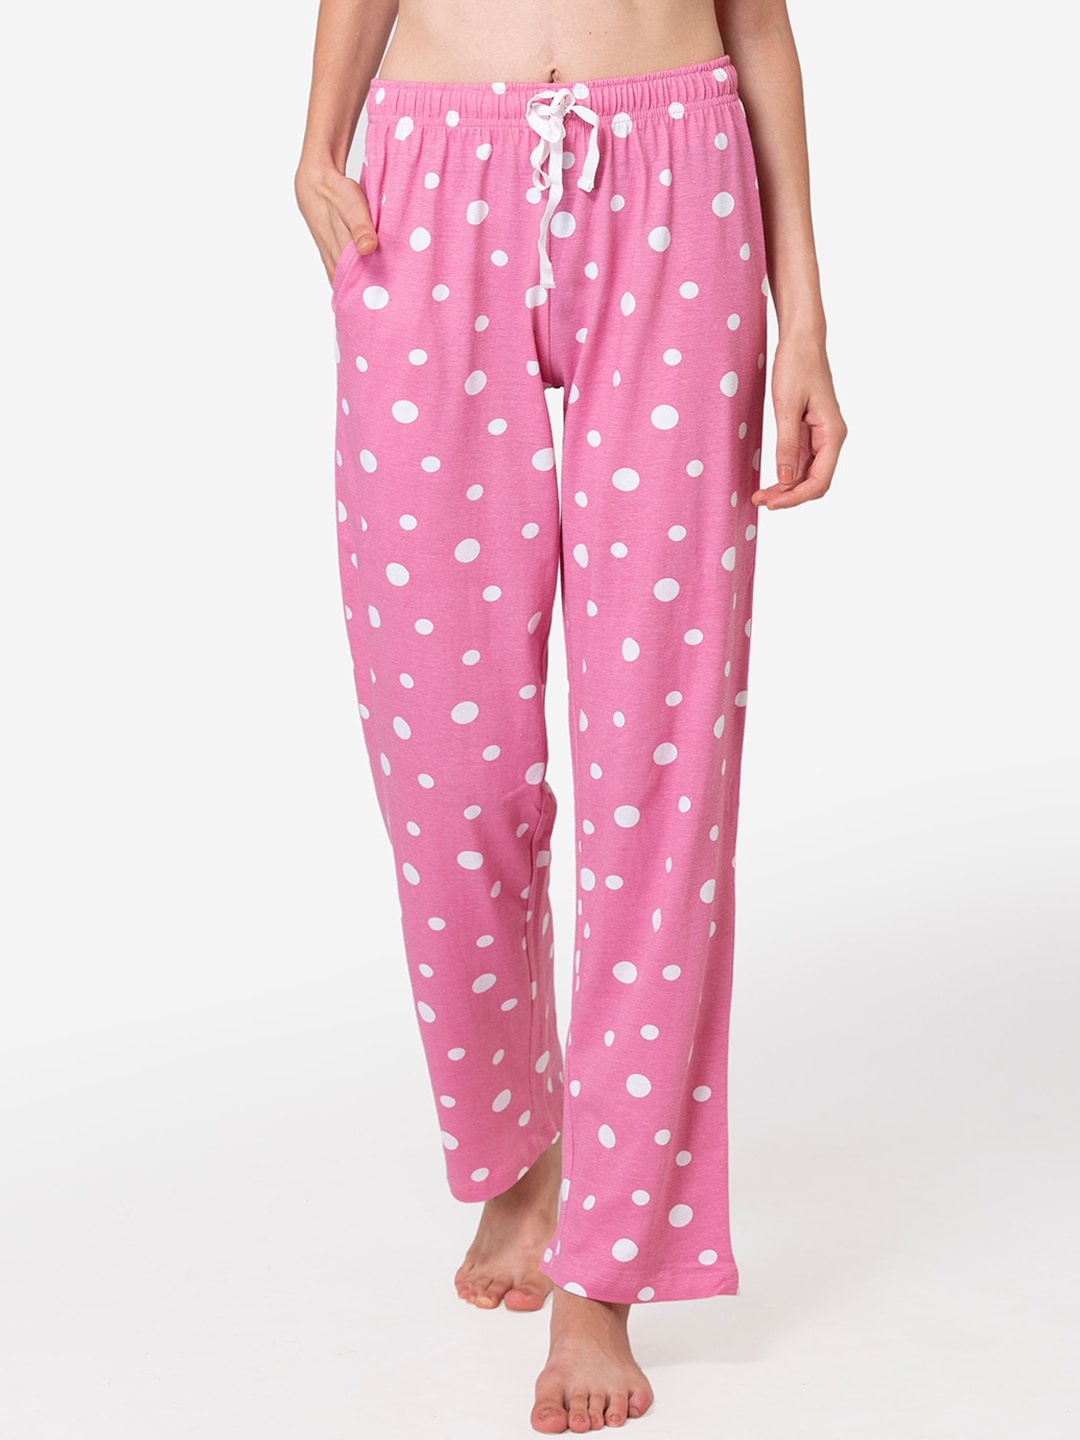 Lounge Dreams Woman Pink Polka Dot Cotton Pyjamas Price in India